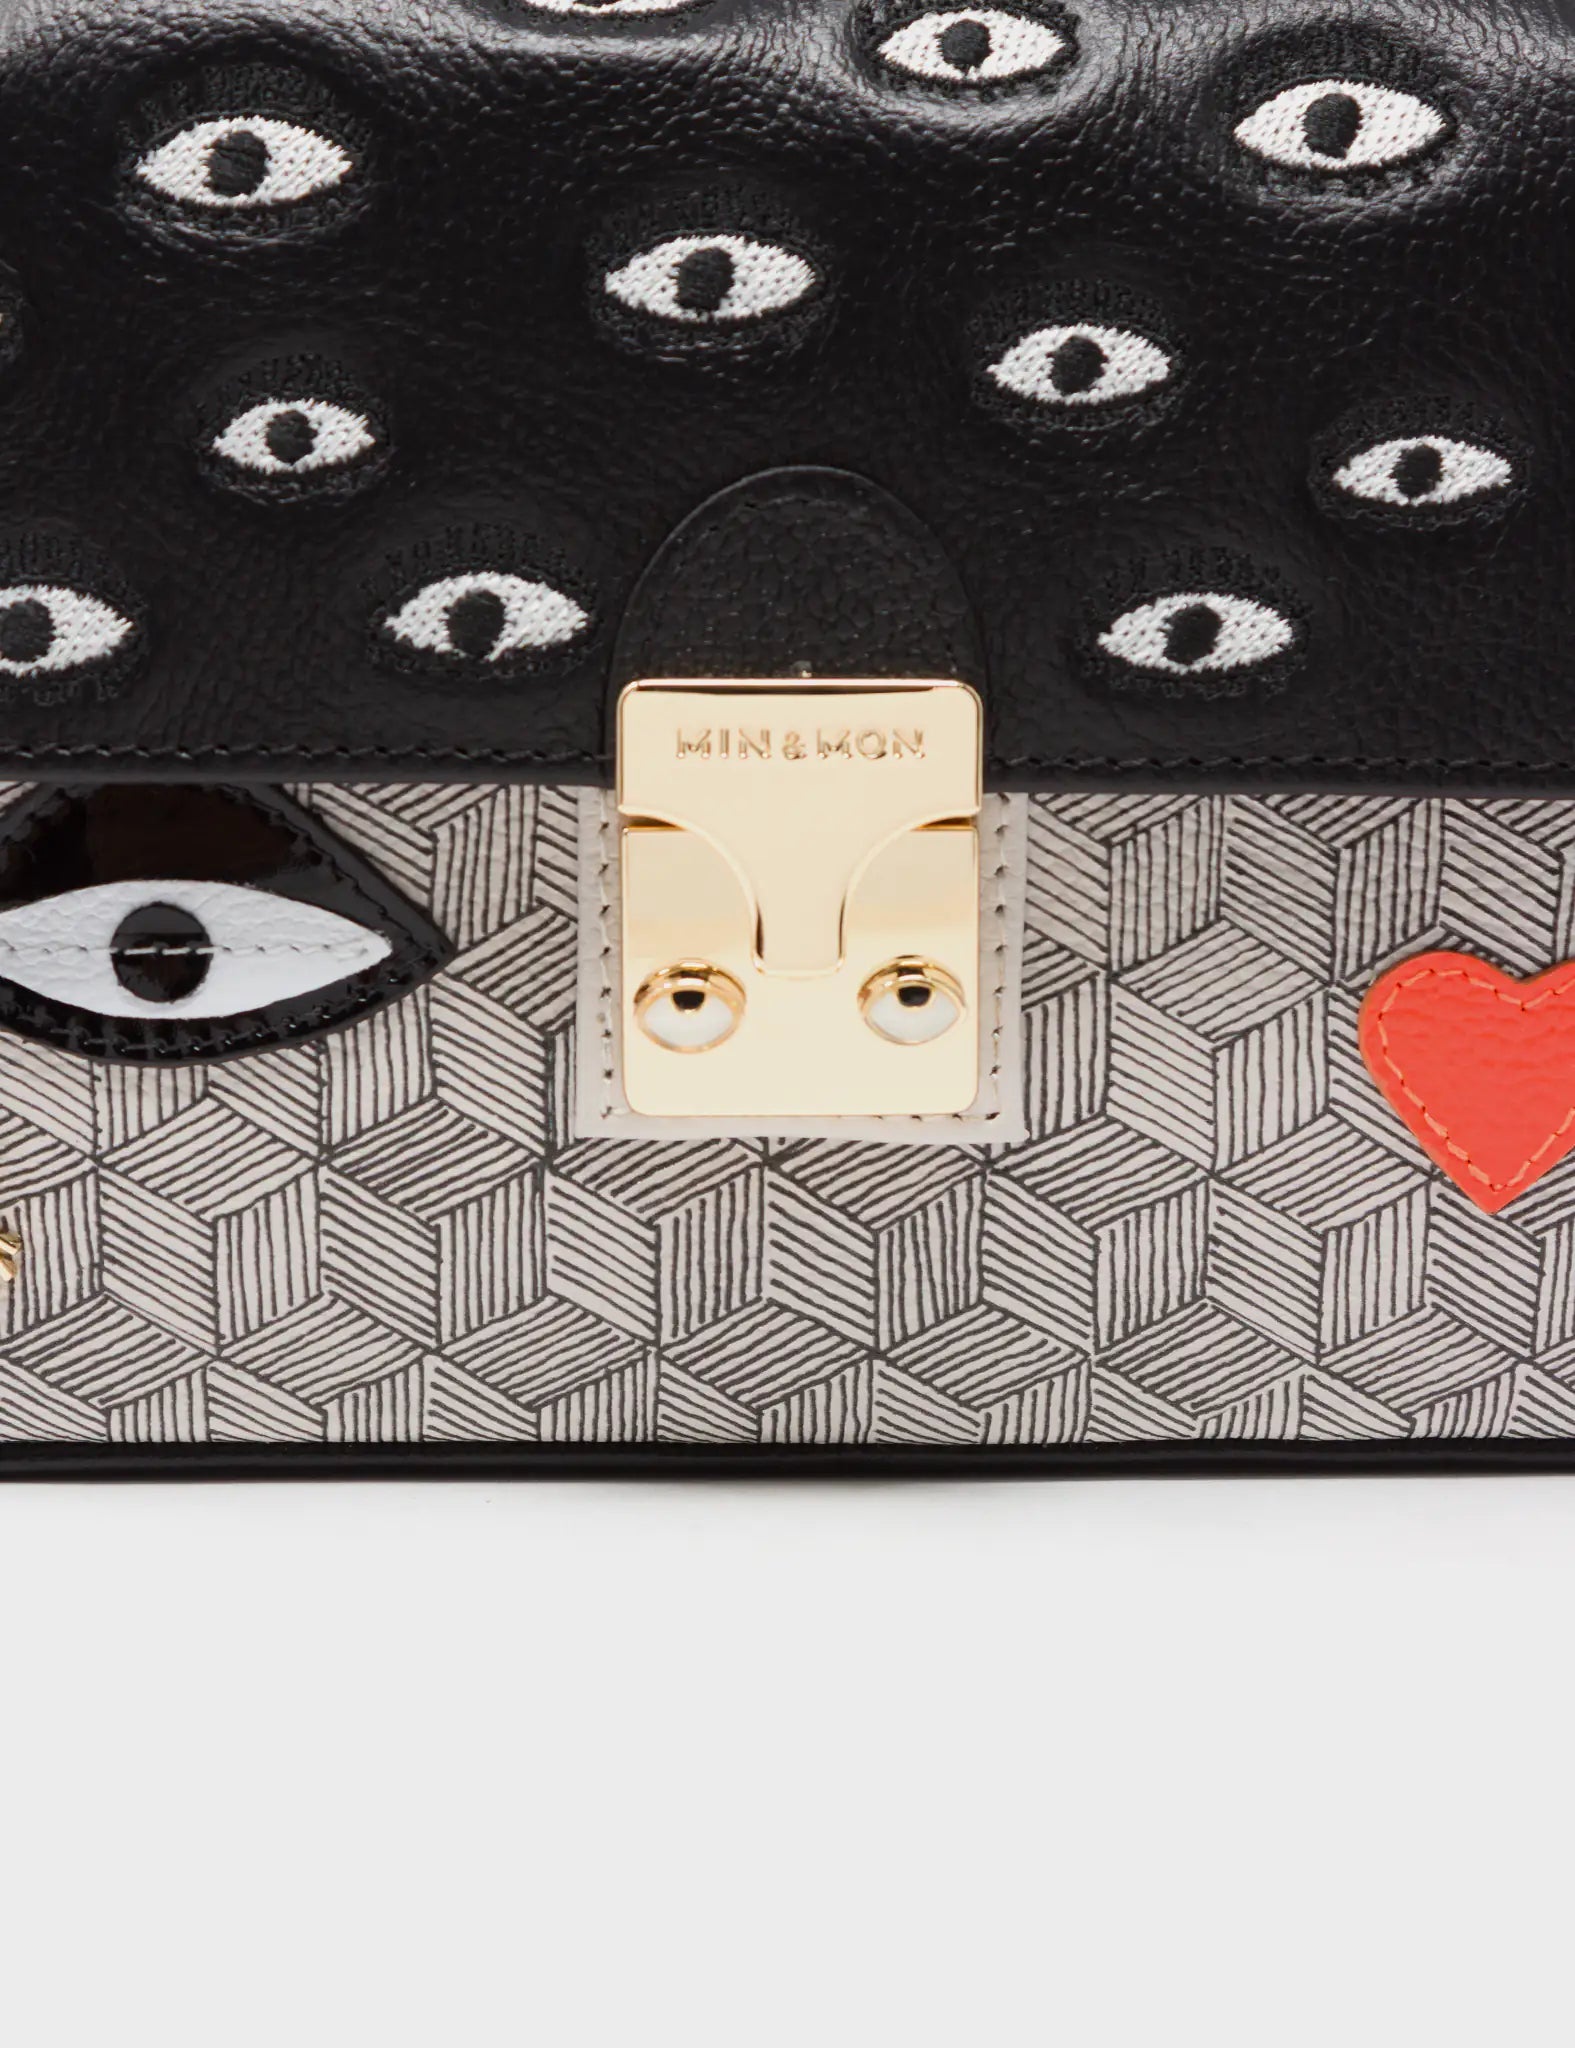 Amantis Crossbody Handbag - Black and Cream All Over Eyes Embroidery - Close up view